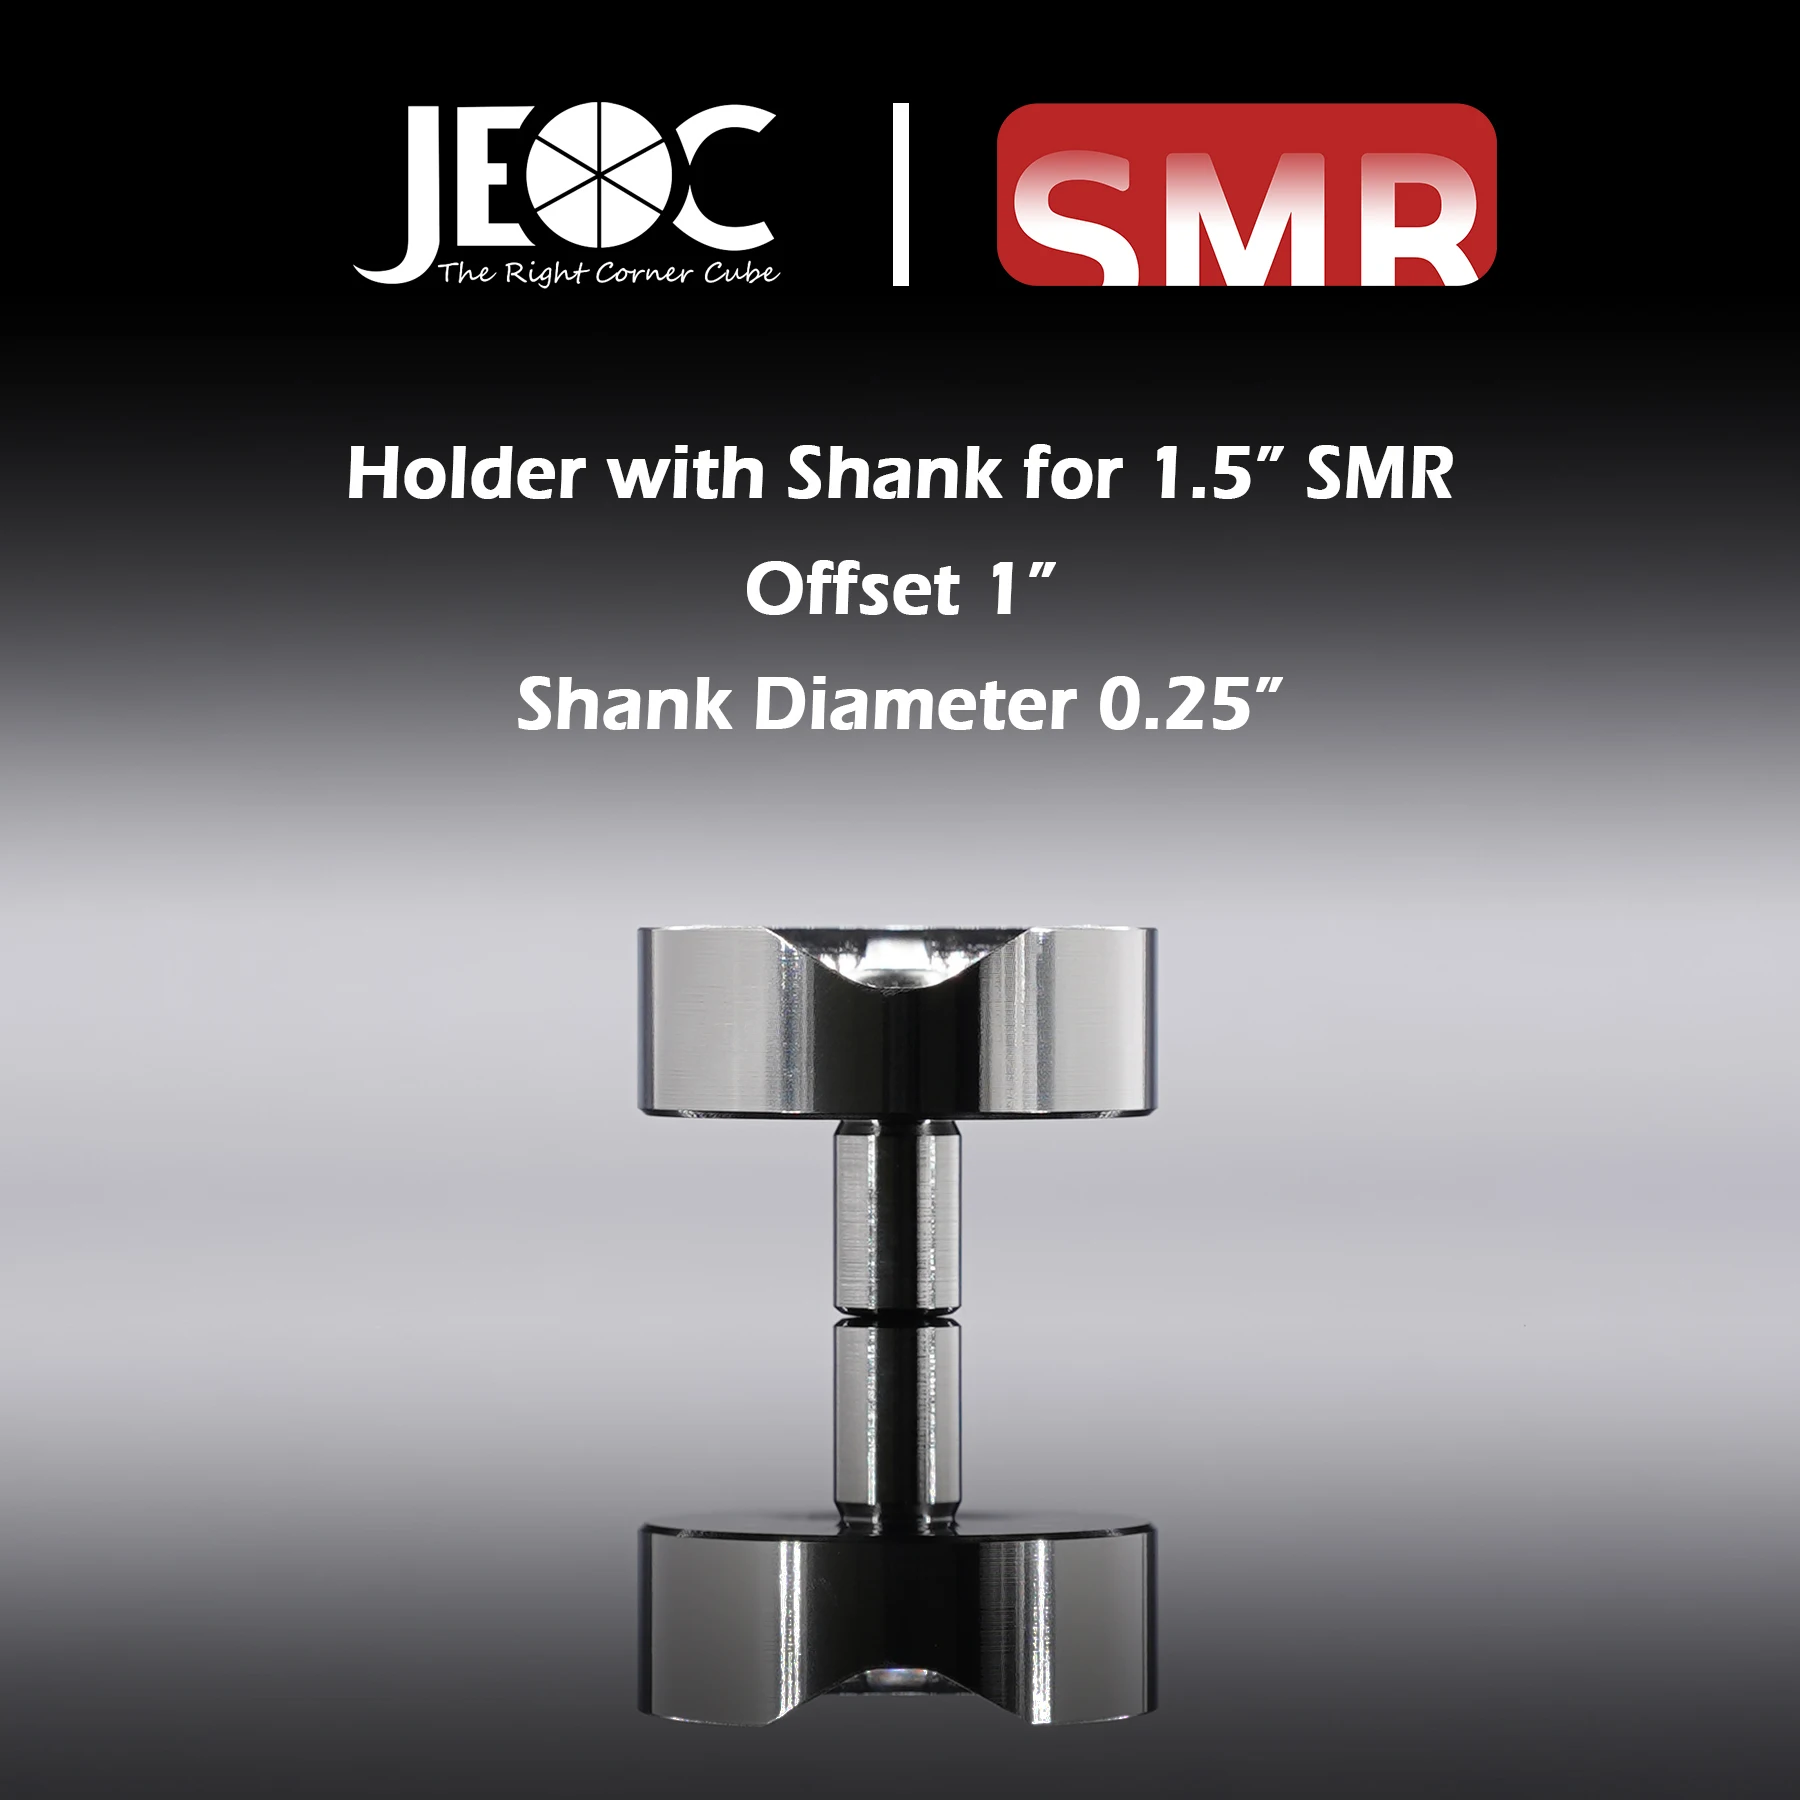 

JEOC Magnetic Holder with Shank for 1.5" SMR, 1" offset, 0.25" Shank diameter, 1.5" Ball Probe Seat